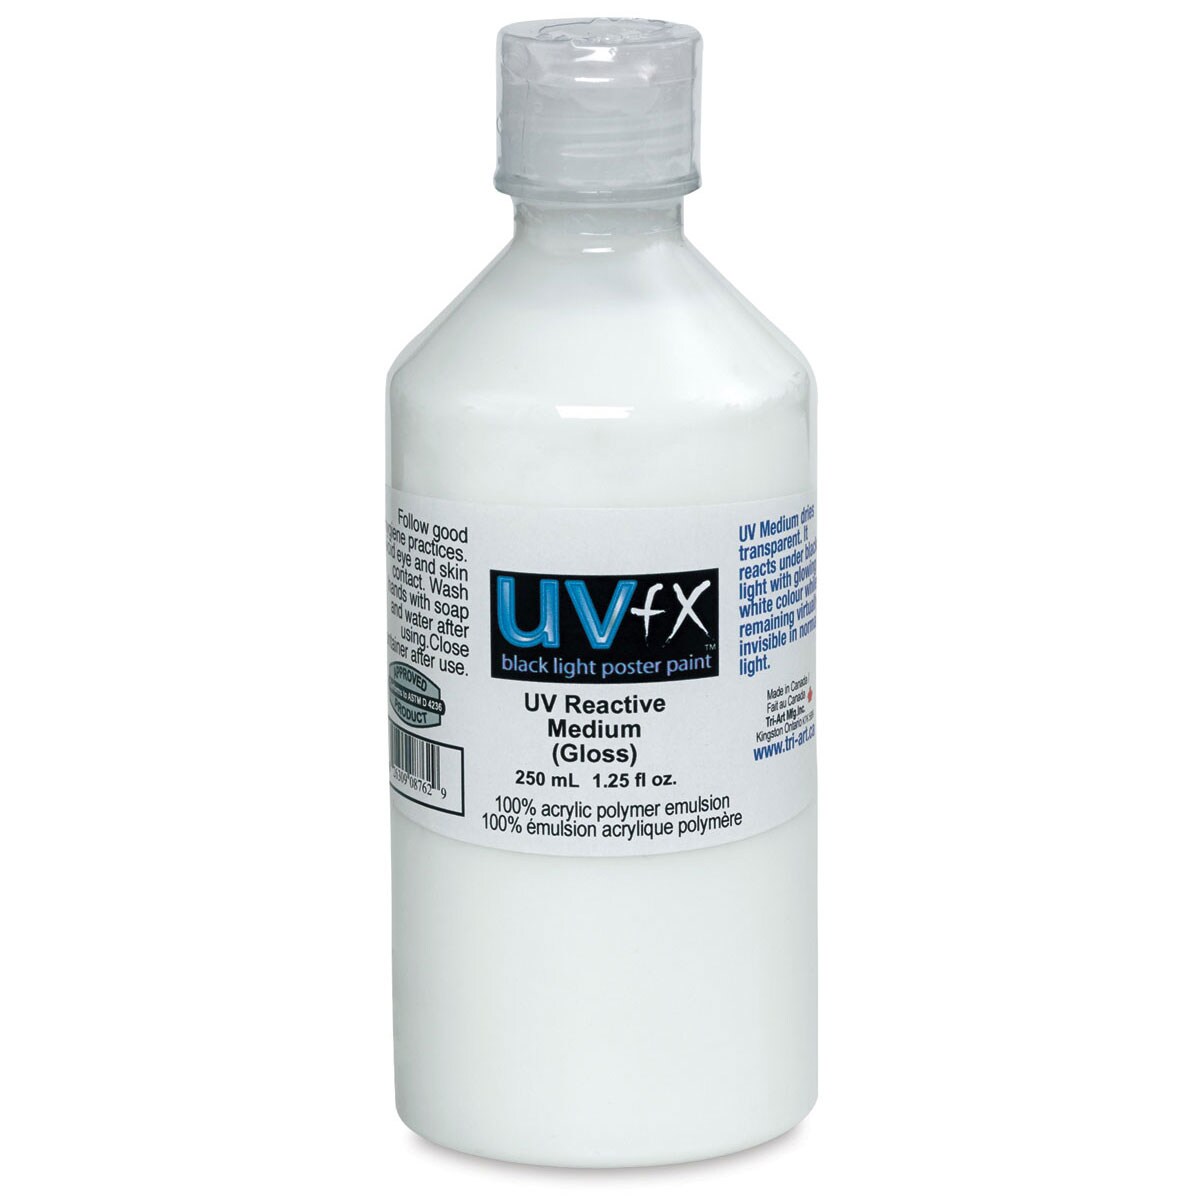 Tri-Art UV FX Medium - UV Reactive Medium - Gloss, 250 ml Bottle